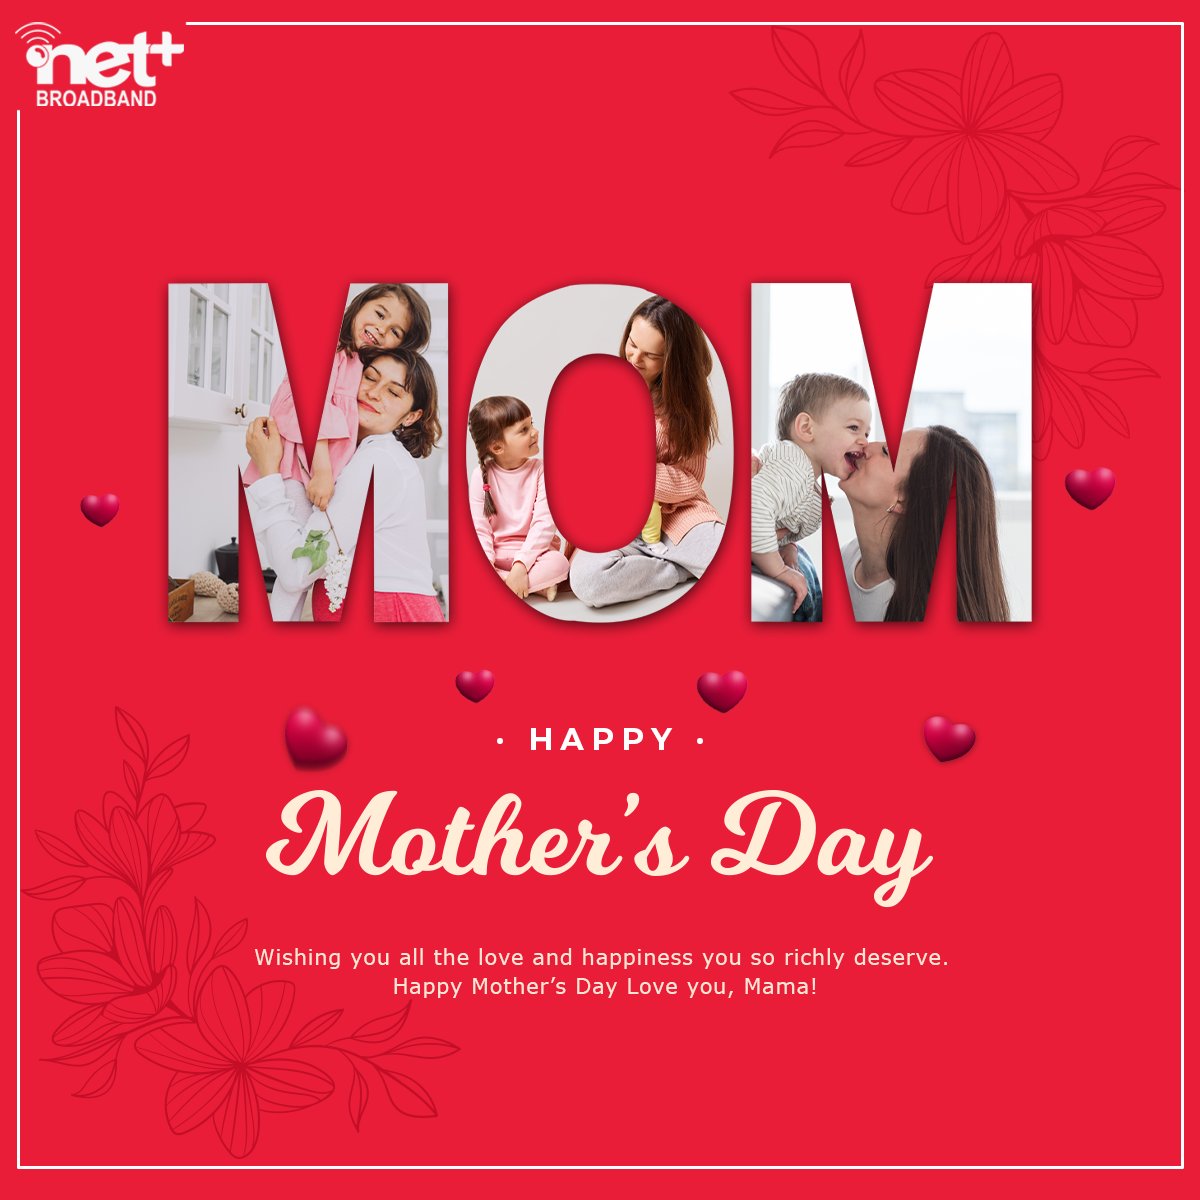 #happymothersday #mothersday2024 #mom #love #WISH #happy #netplusbroadband